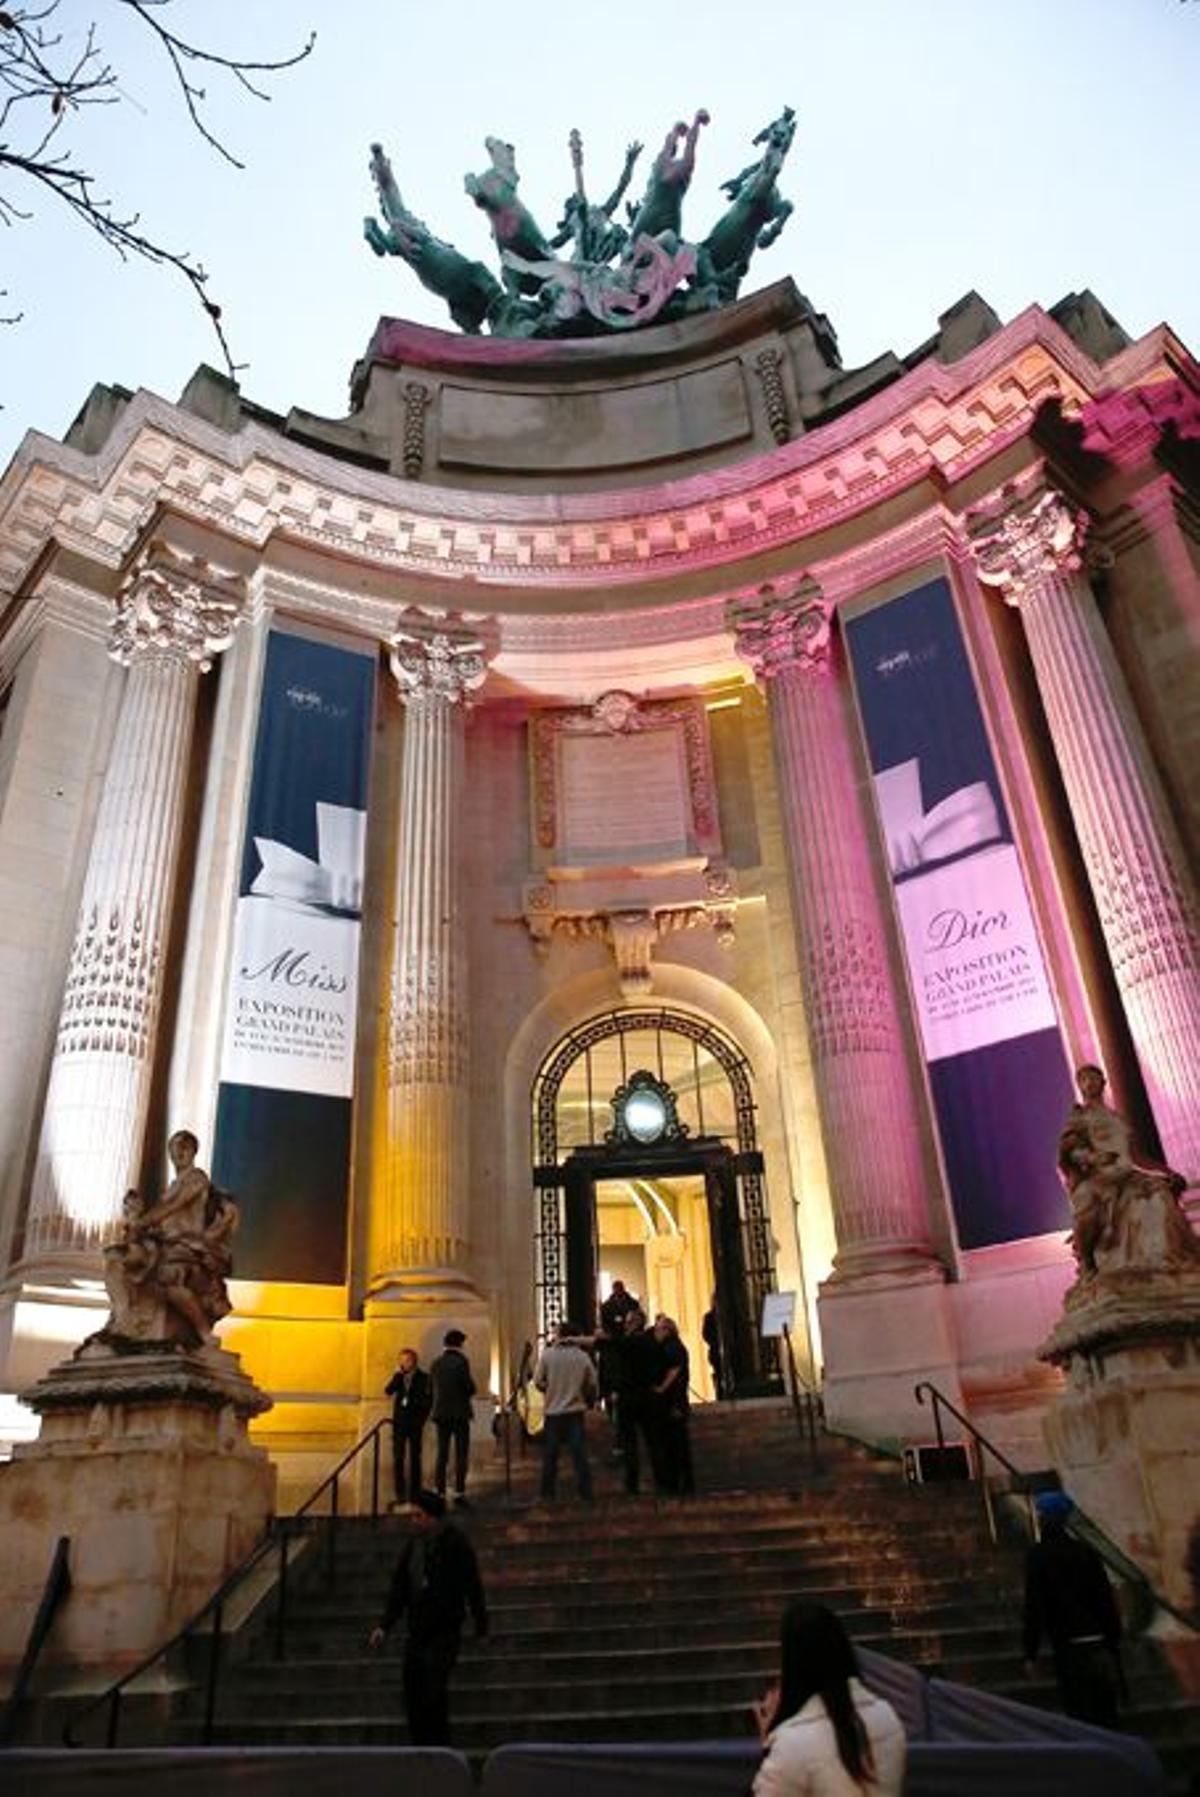 Miss Dior, inauguración, exposición, Natalie Portman, París, perfume, icono, Karl Lagerfeld